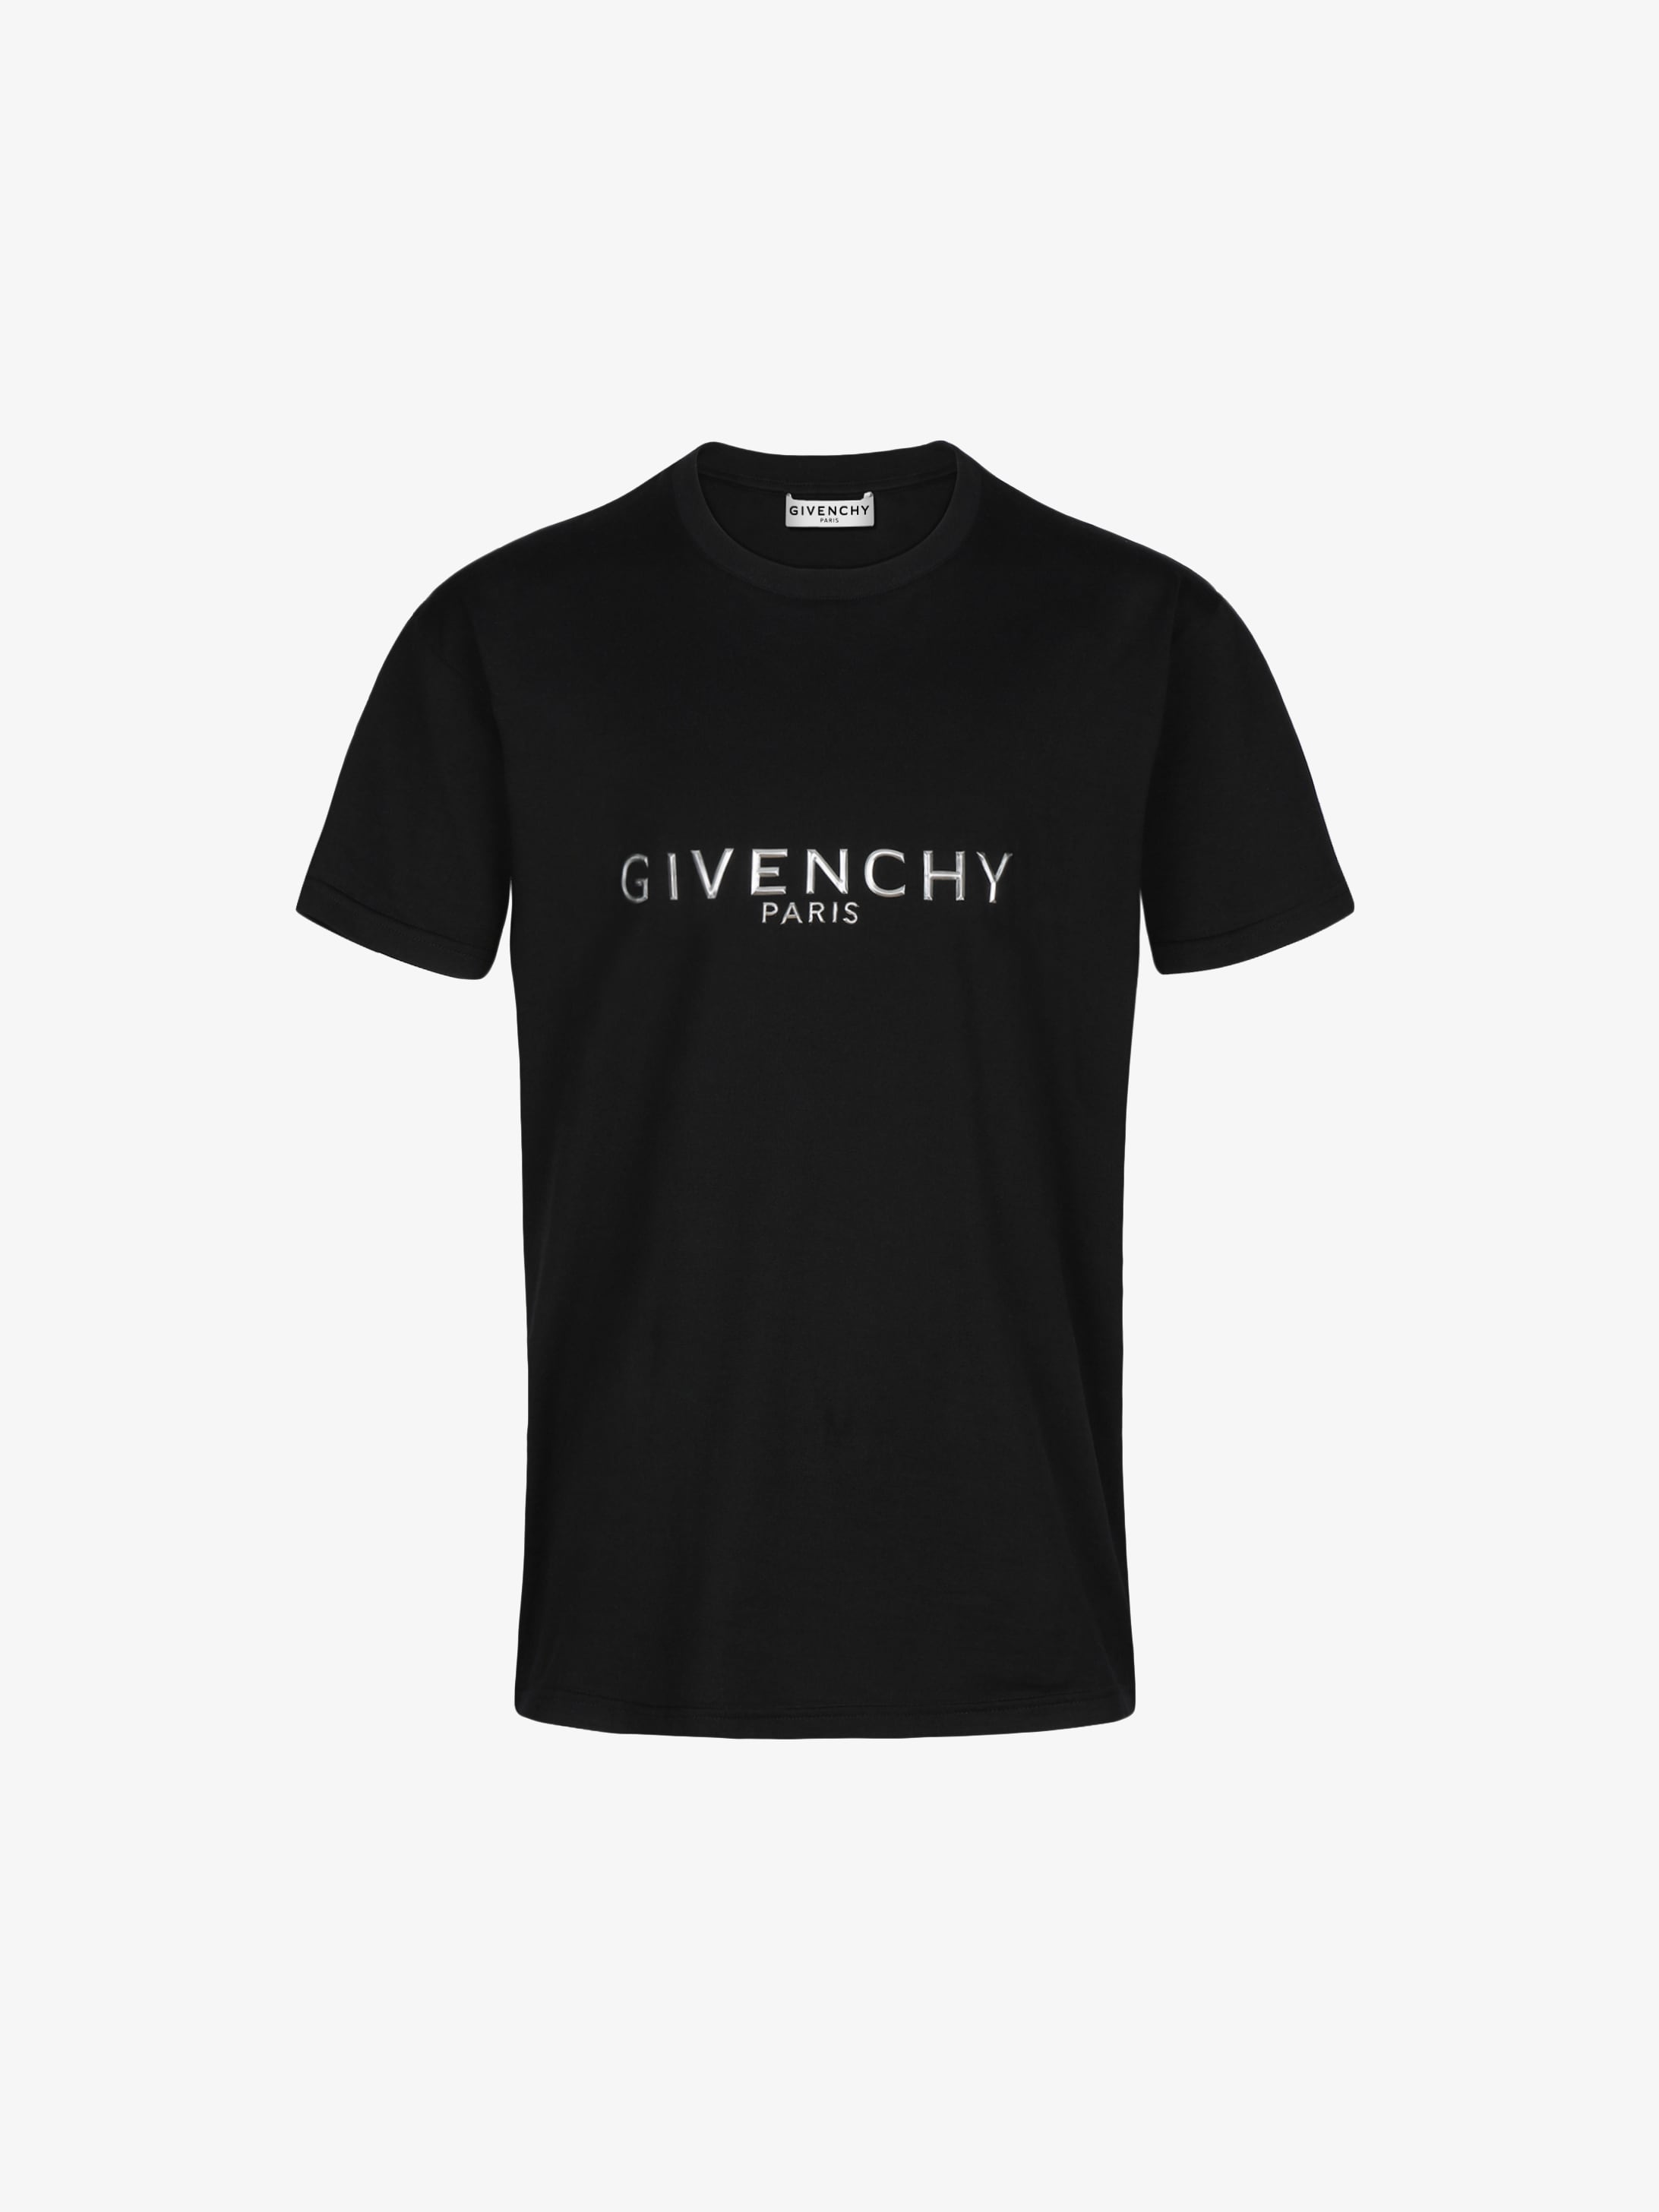 GIVENCHY PARIS signature slim embossed t-shirt | GIVENCHY Paris